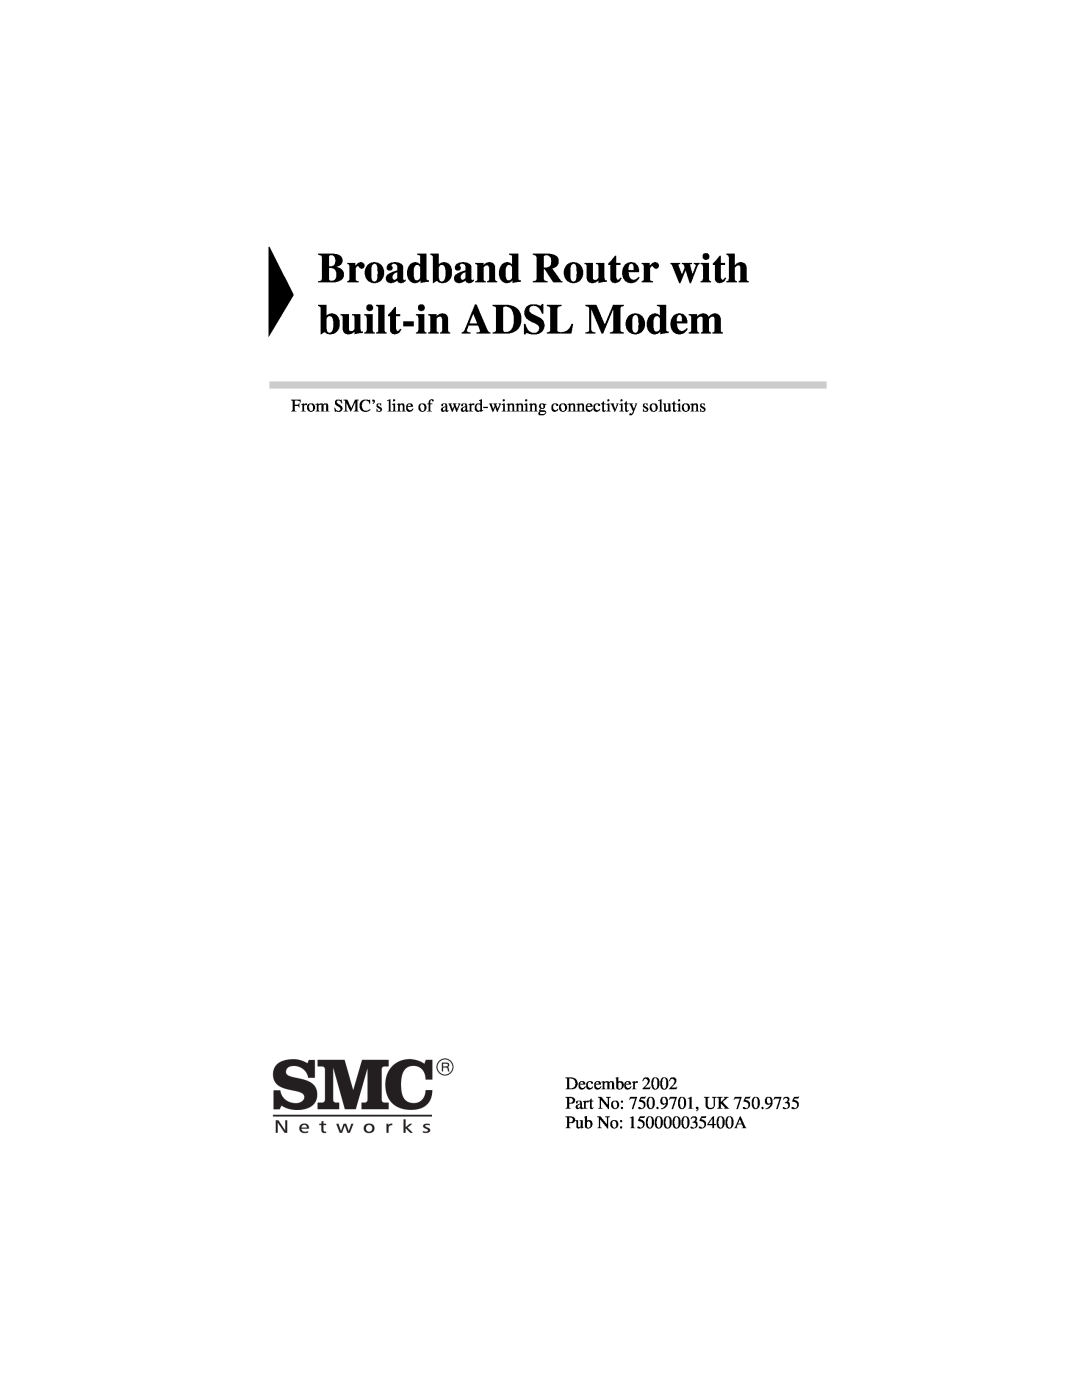 SMC Networks SMC7404BRA EU manual Broadband Router with built-in ADSL Modem, Part No 750.9701, UK Pub No 150000035400A 